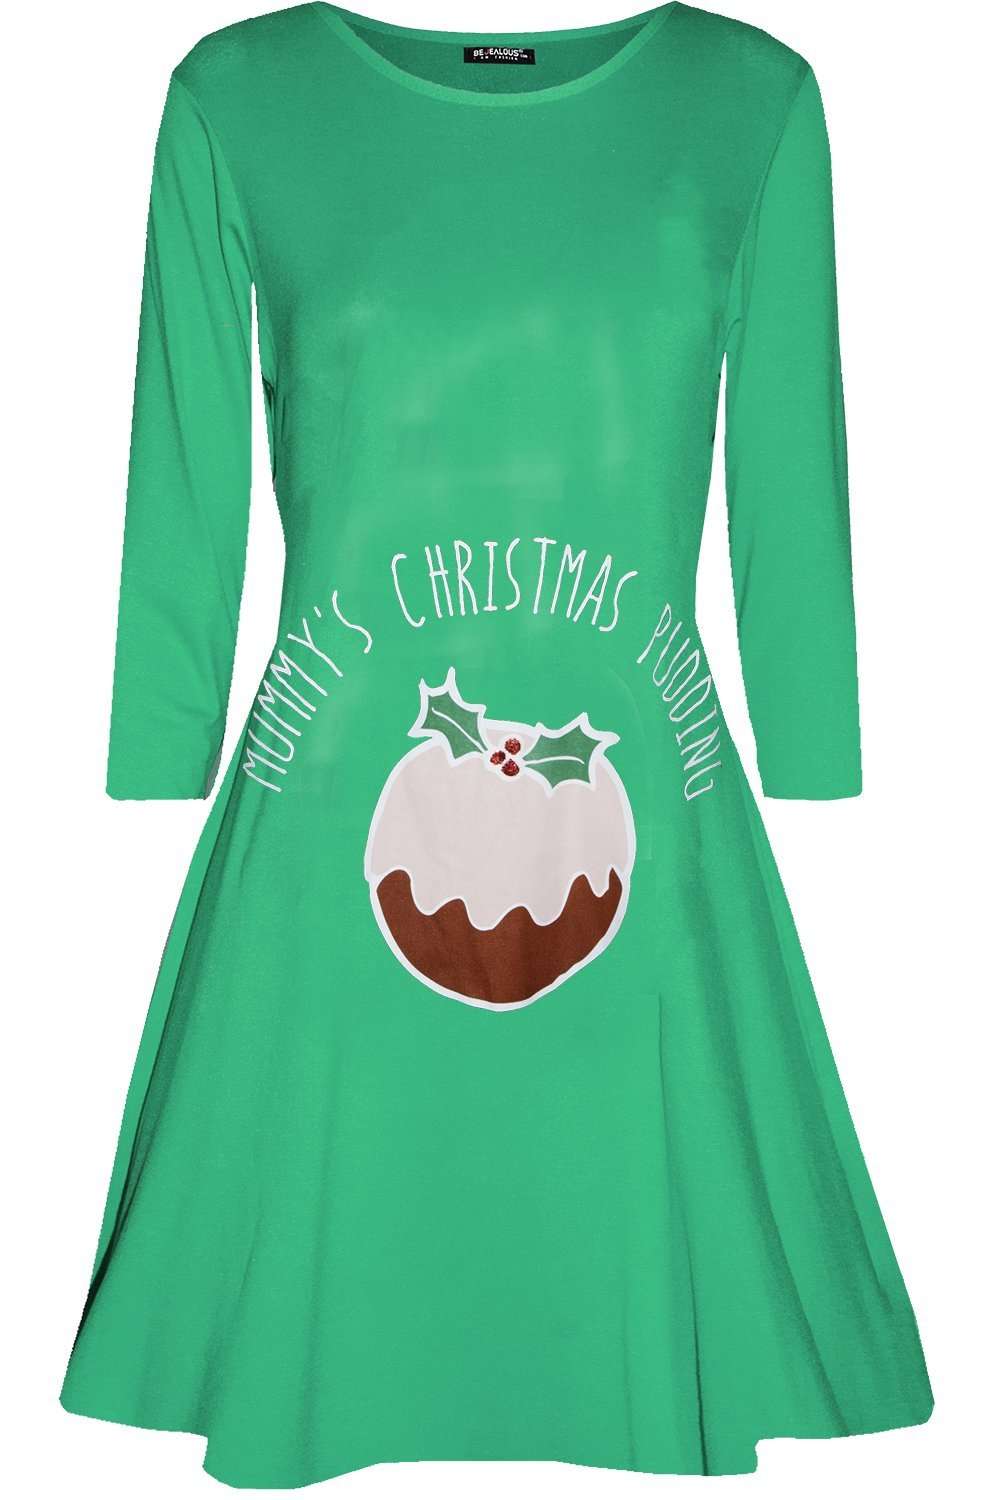 Mummy's Christmas Pudding Maternity Swing Dress - bejealous-com